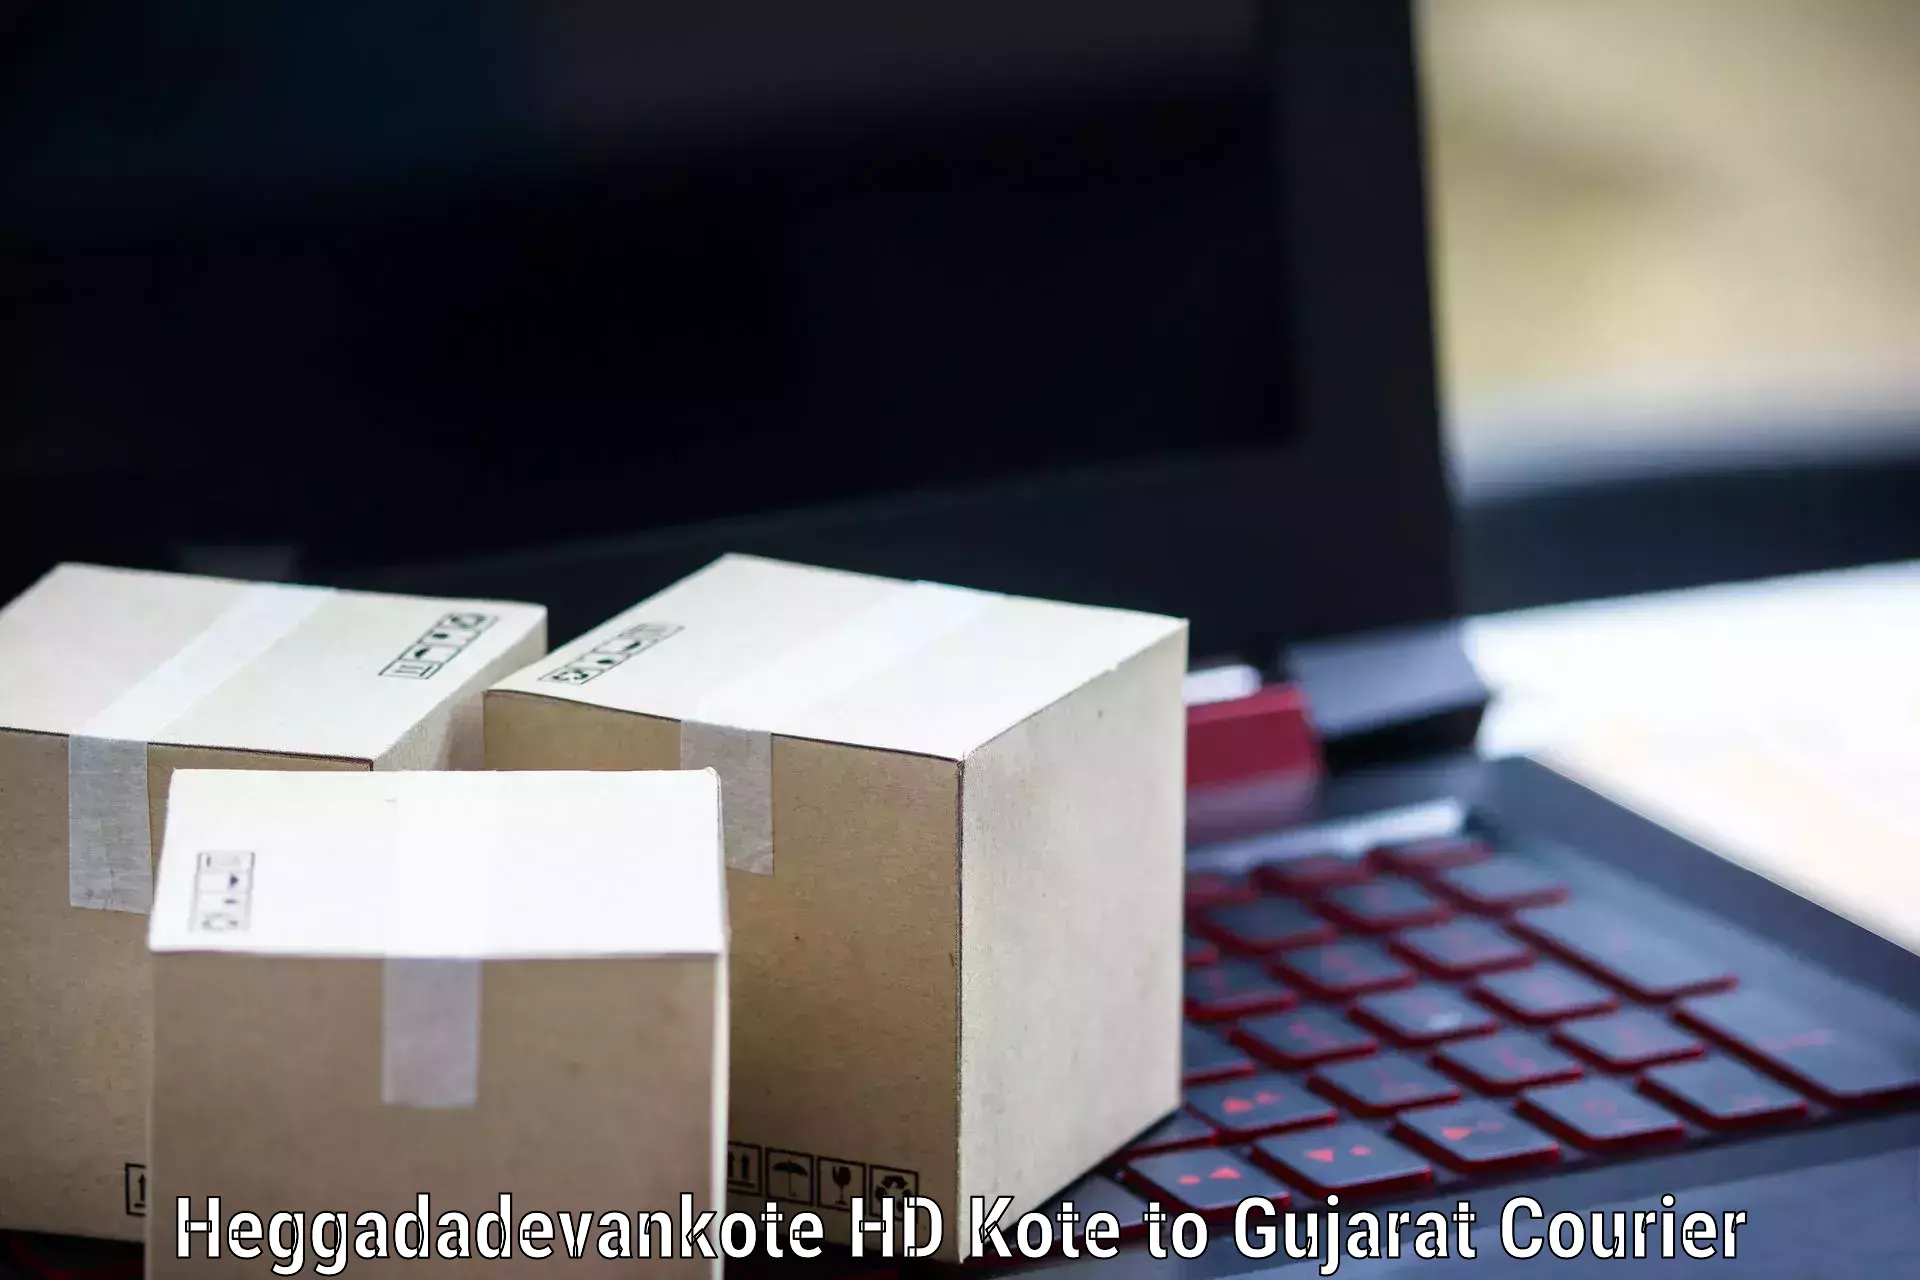 On-demand delivery Heggadadevankote HD Kote to Gujarat